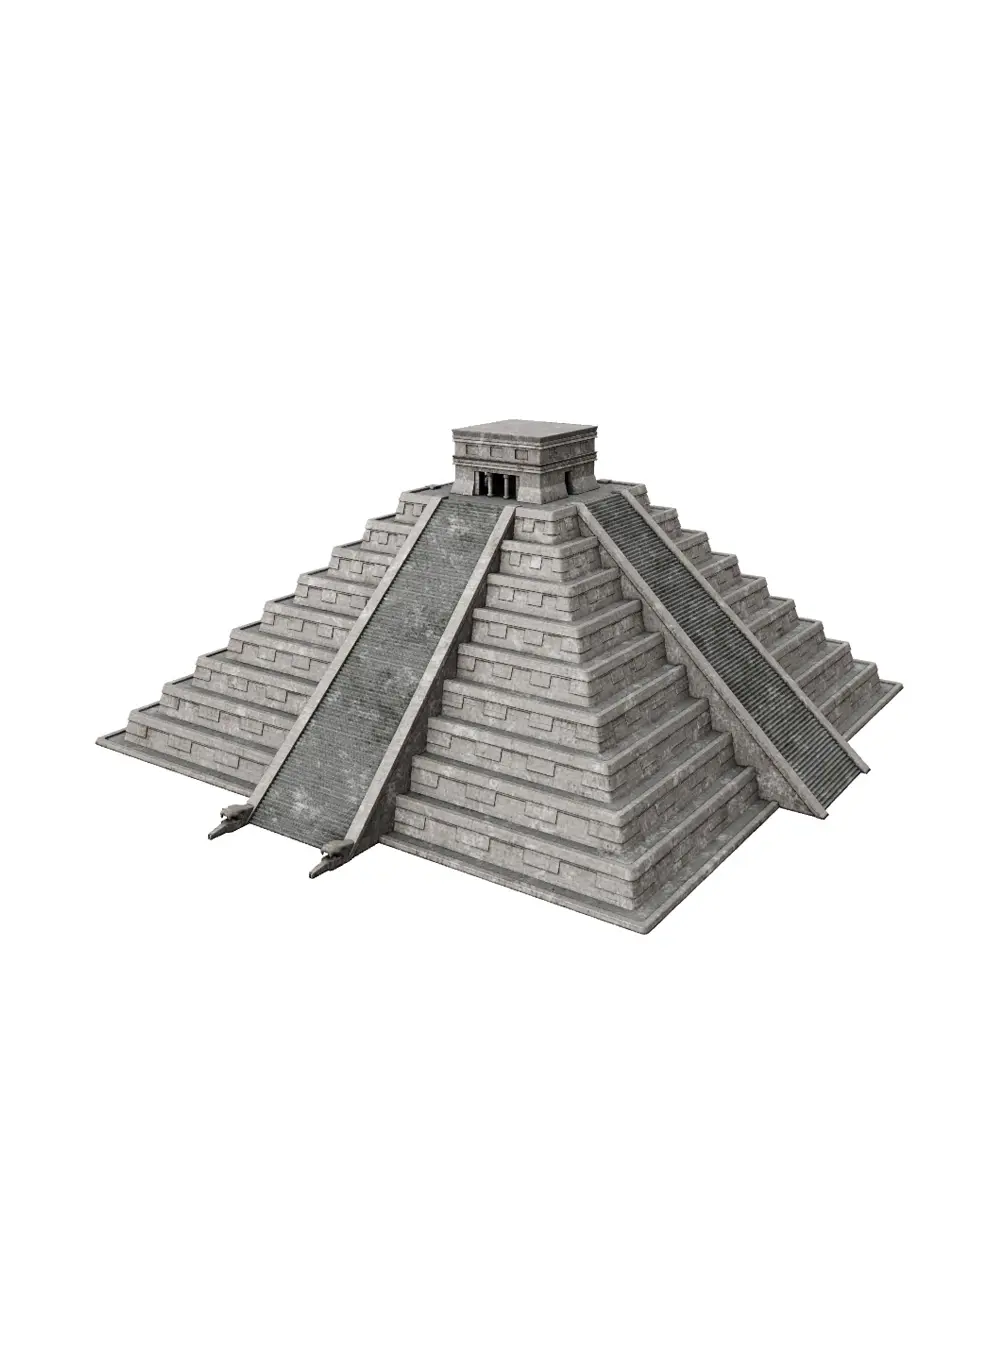 Mexican Pyramid